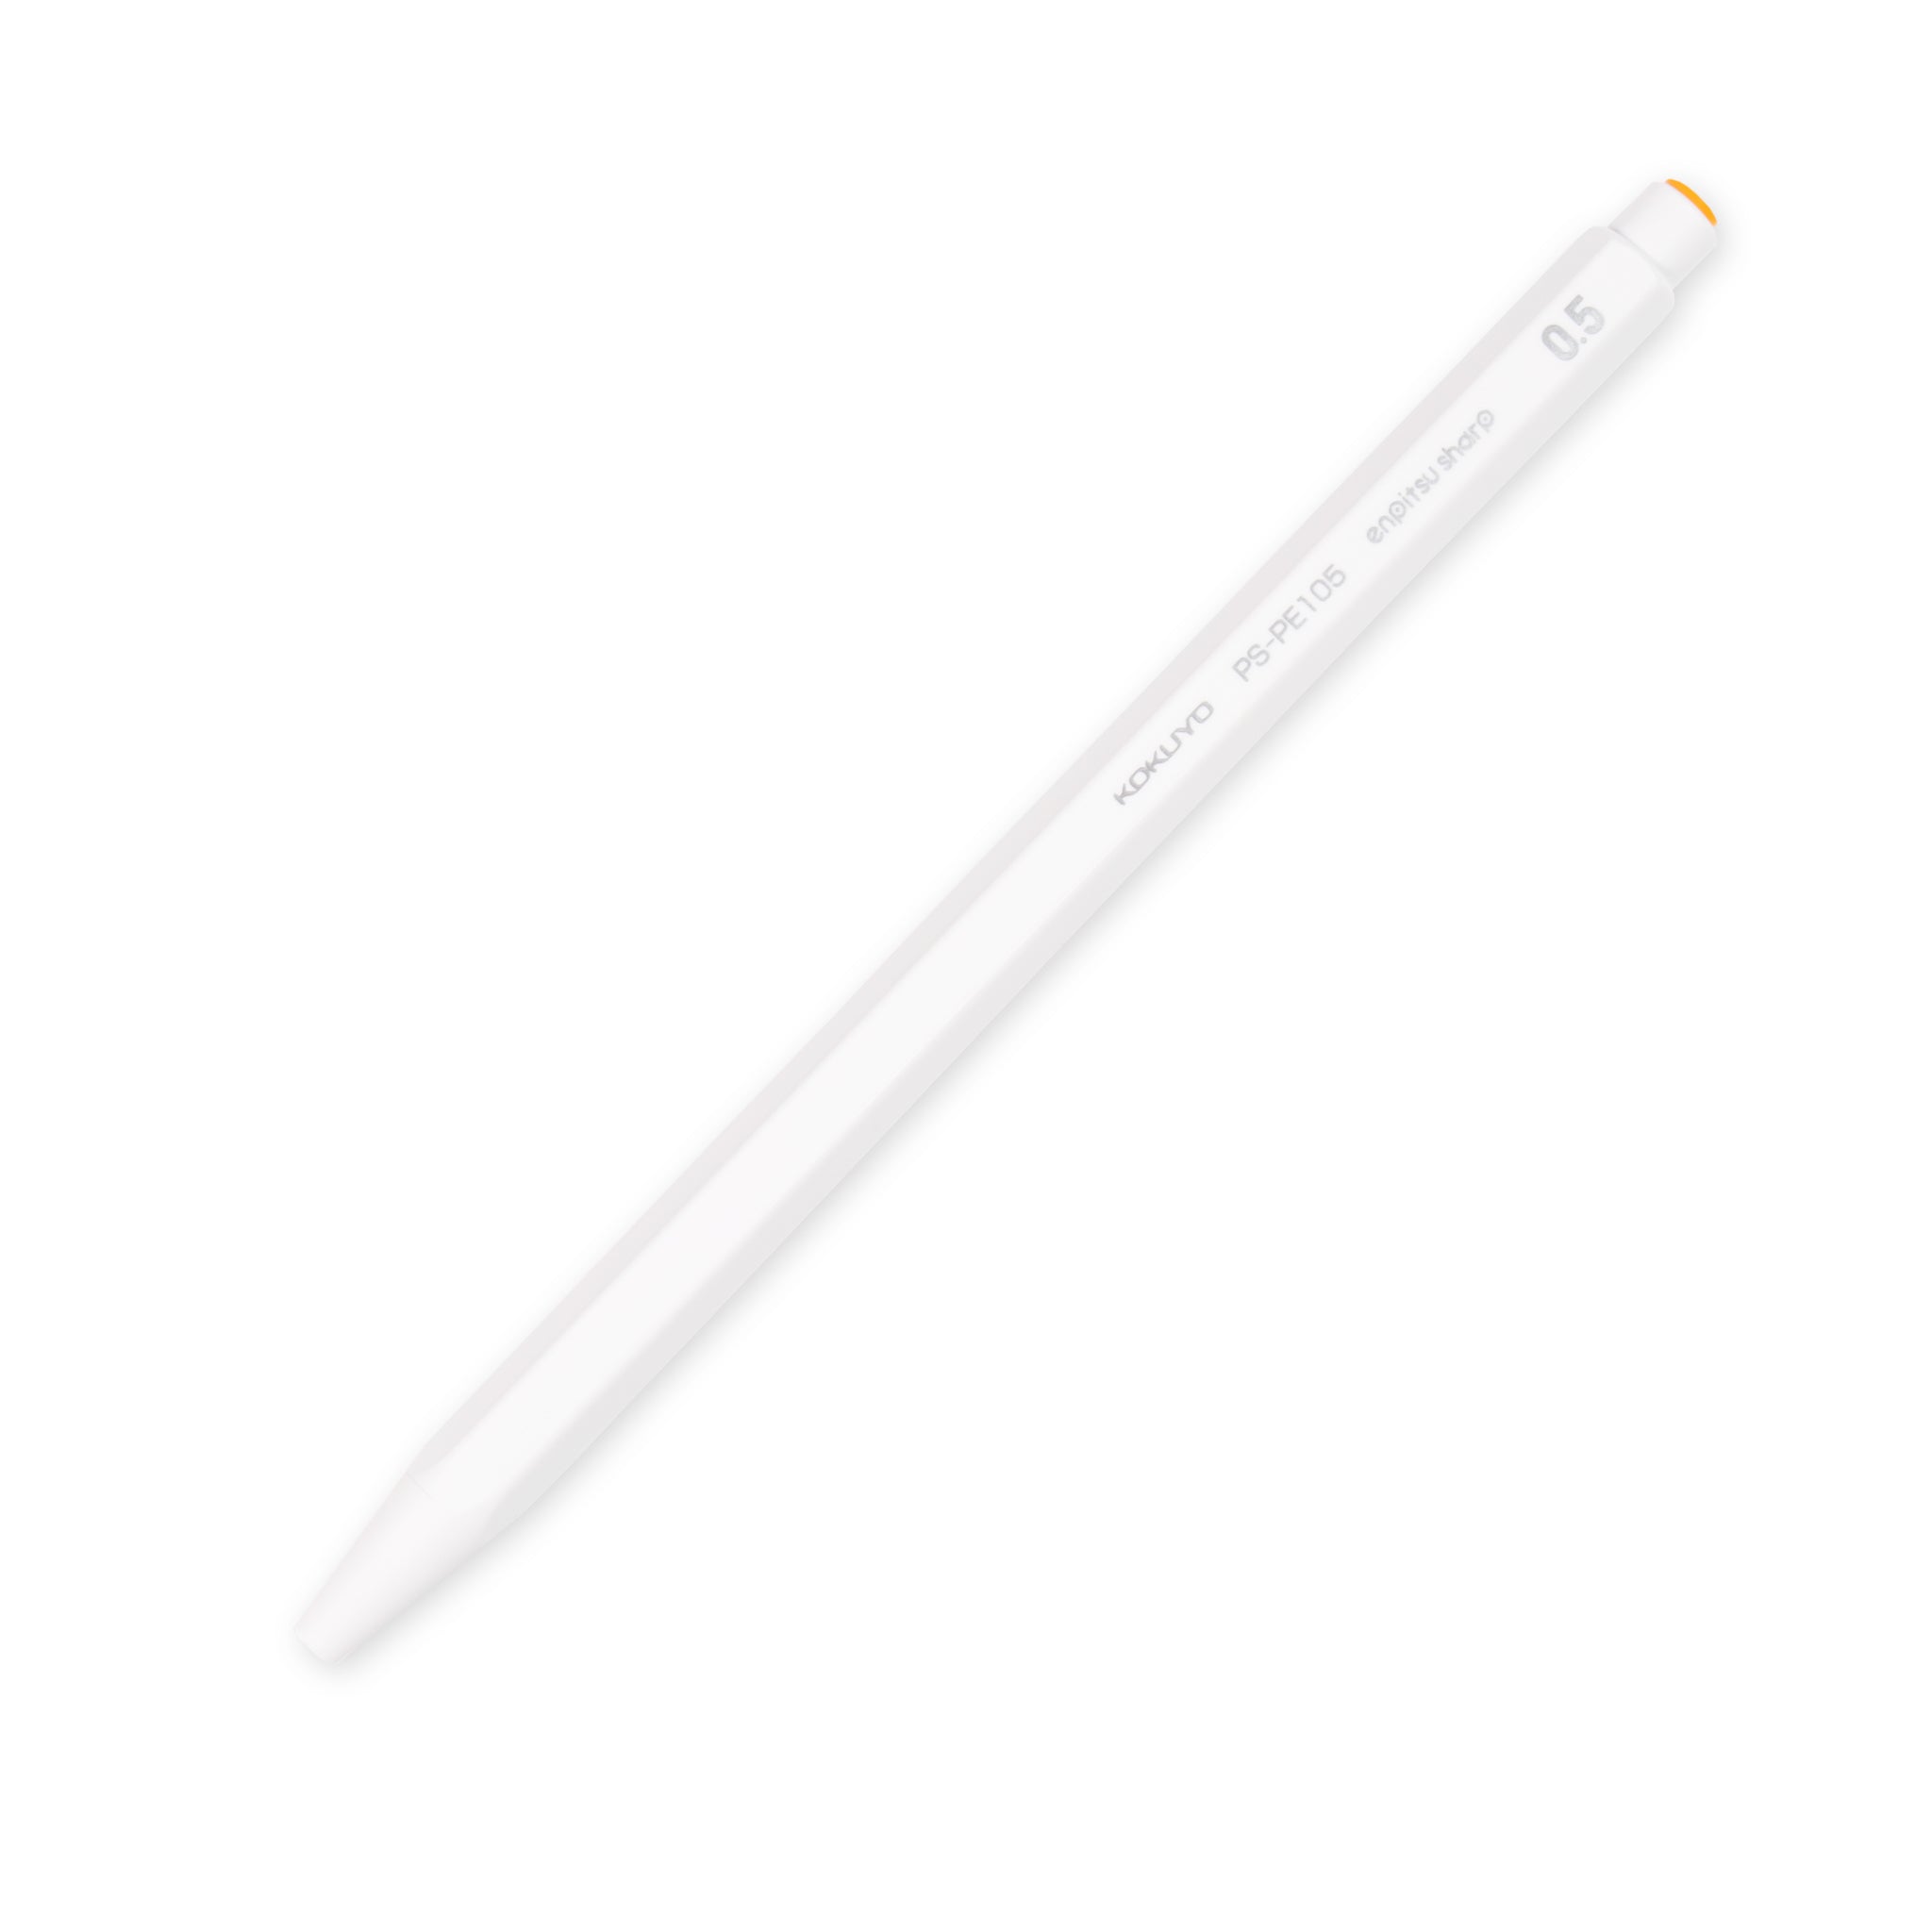 RARE++++) Set of KOKUYO enpitsu sharp Mechanical Pencil White Limited NEW